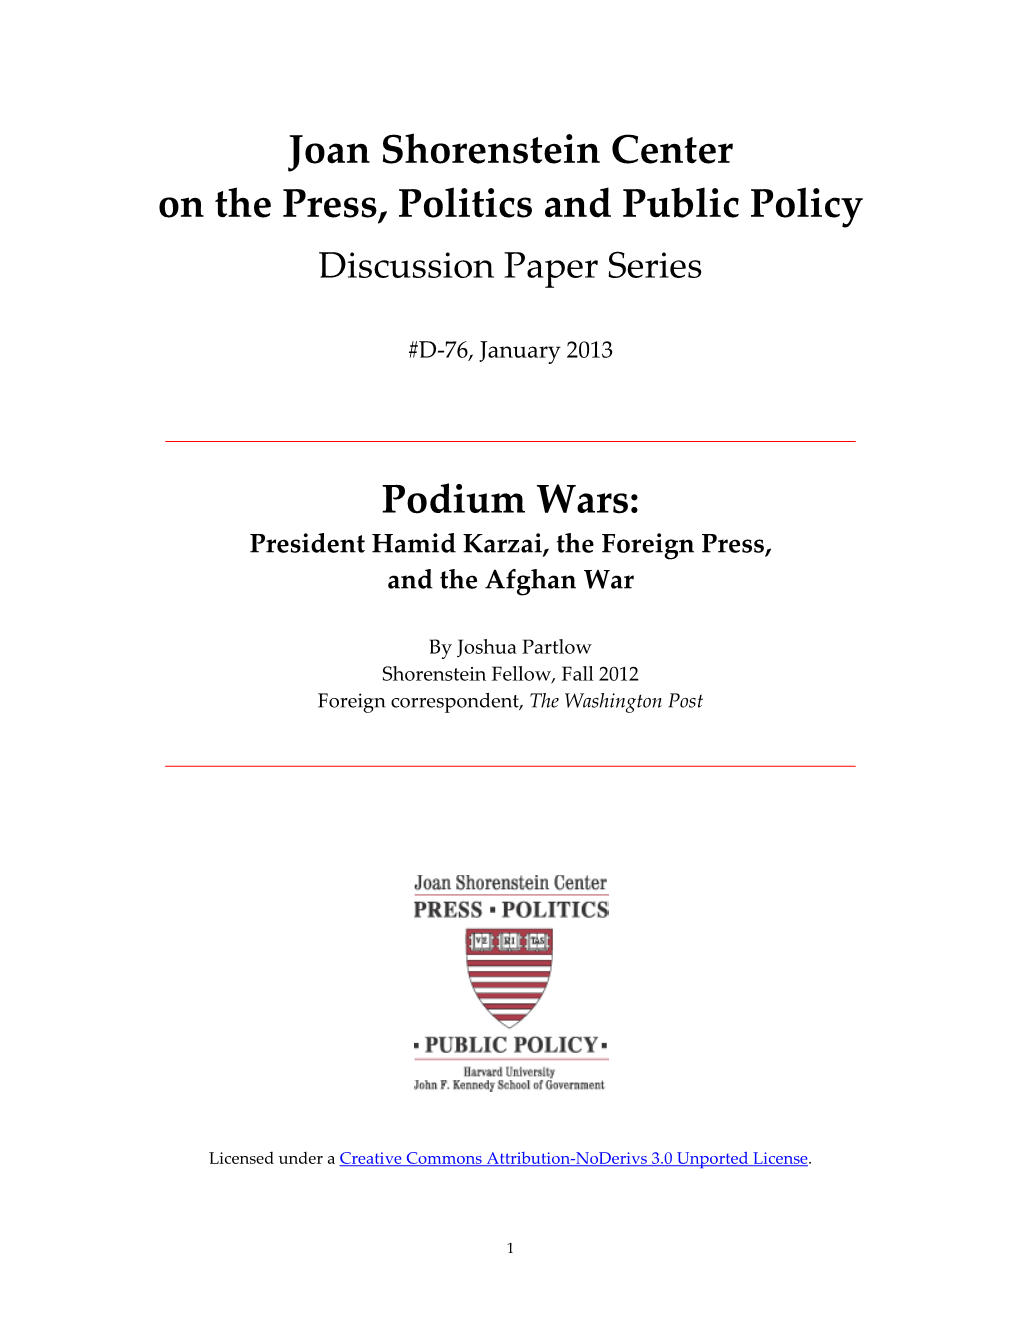 Joan Shorenstein Center on the Press, Politics and Public Policy Podium